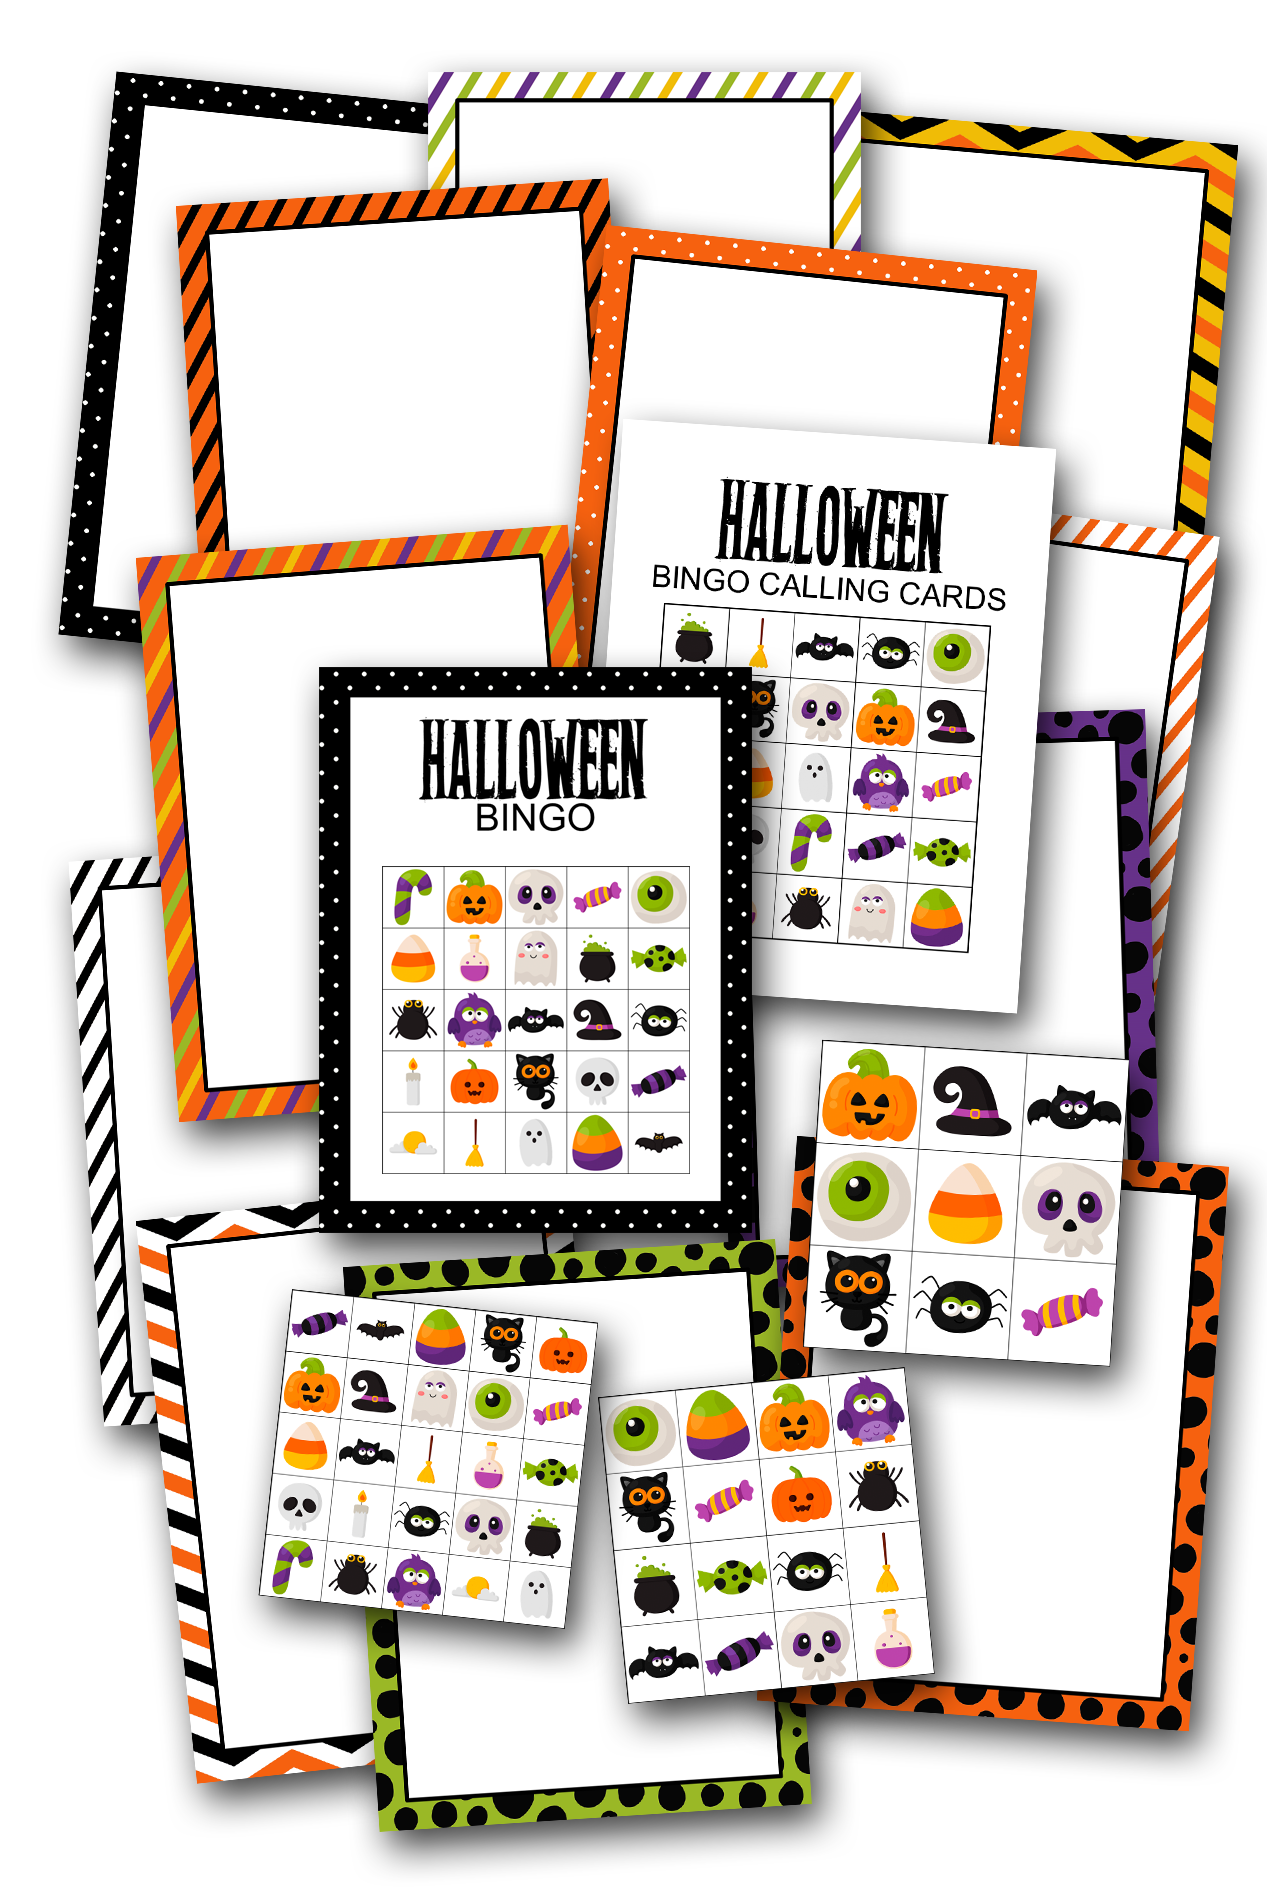 Simply Love PLR Halloween Bingo Template Set